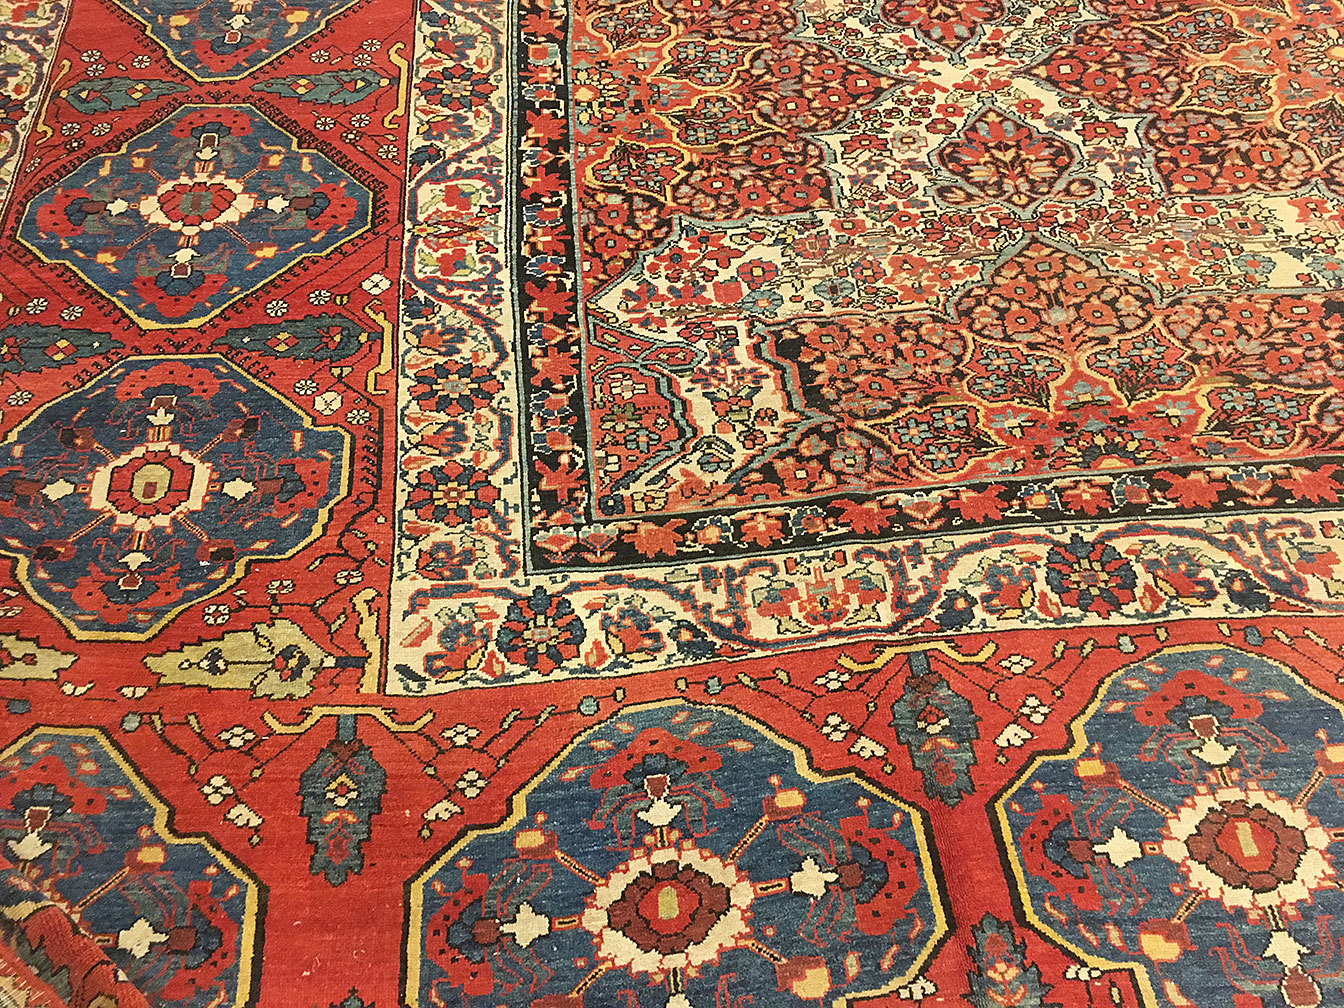 Vintage baktiari Carpet - # 53367